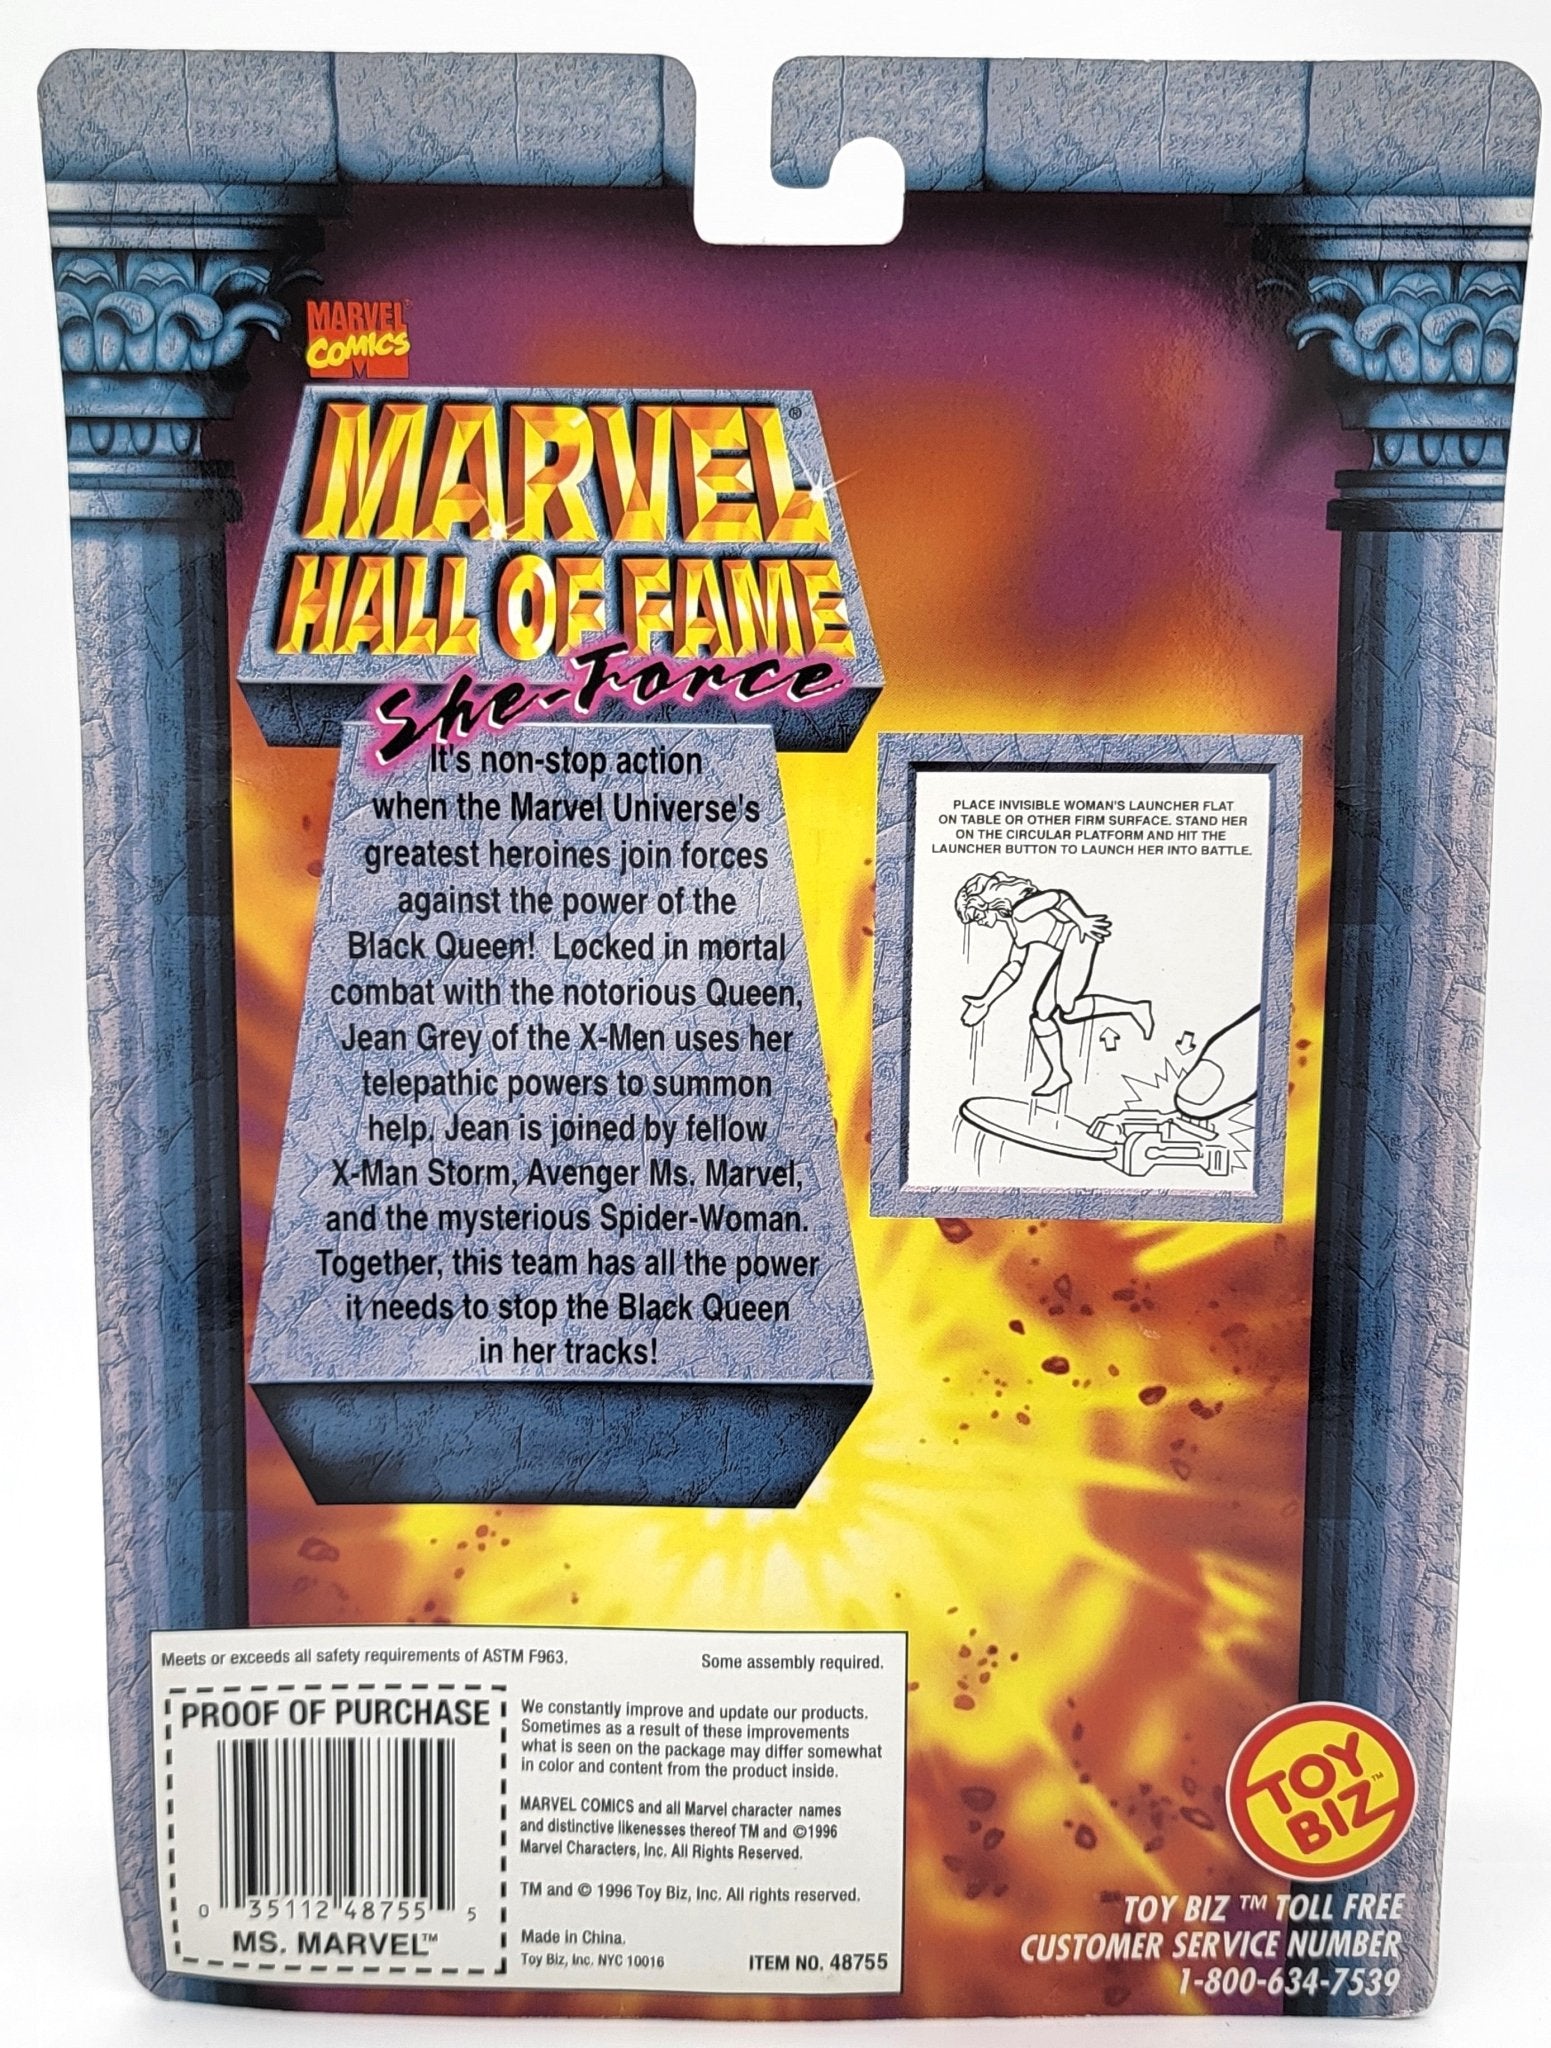 Toy Biz - Toy Biz | Marvel Hall of Fame She Force - Ms. Marvel 1996 | Vintage Action Figure - Action Figures - Steady Bunny Shop